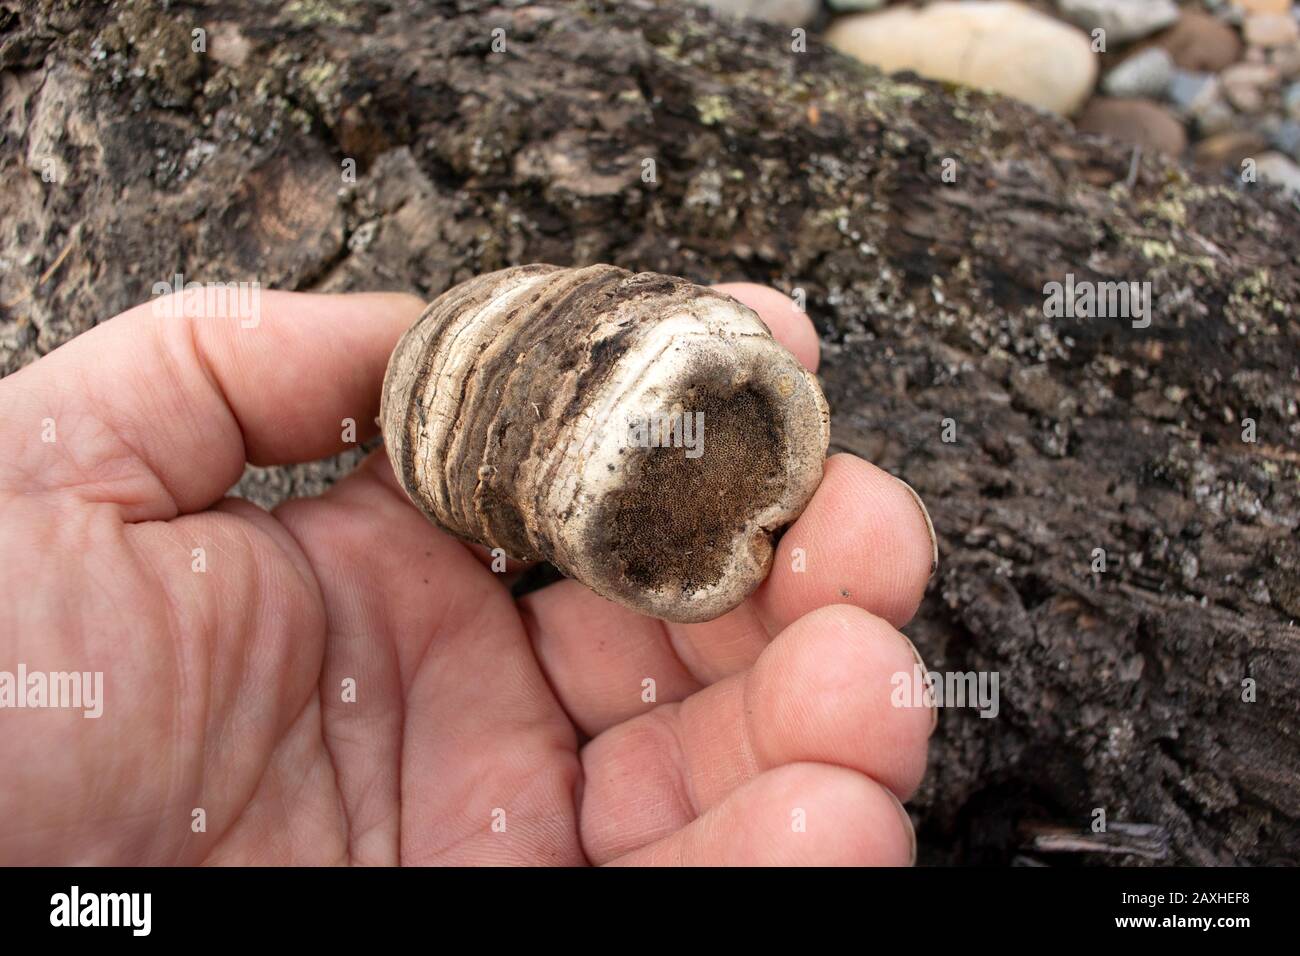 A baby Agarikon mushroom, Laricifomes officinalis, found growing on a dead ponderosa pine, Pinus ponderosa, log, on Callahan Creek, in Troy, Montana. Stock Photo